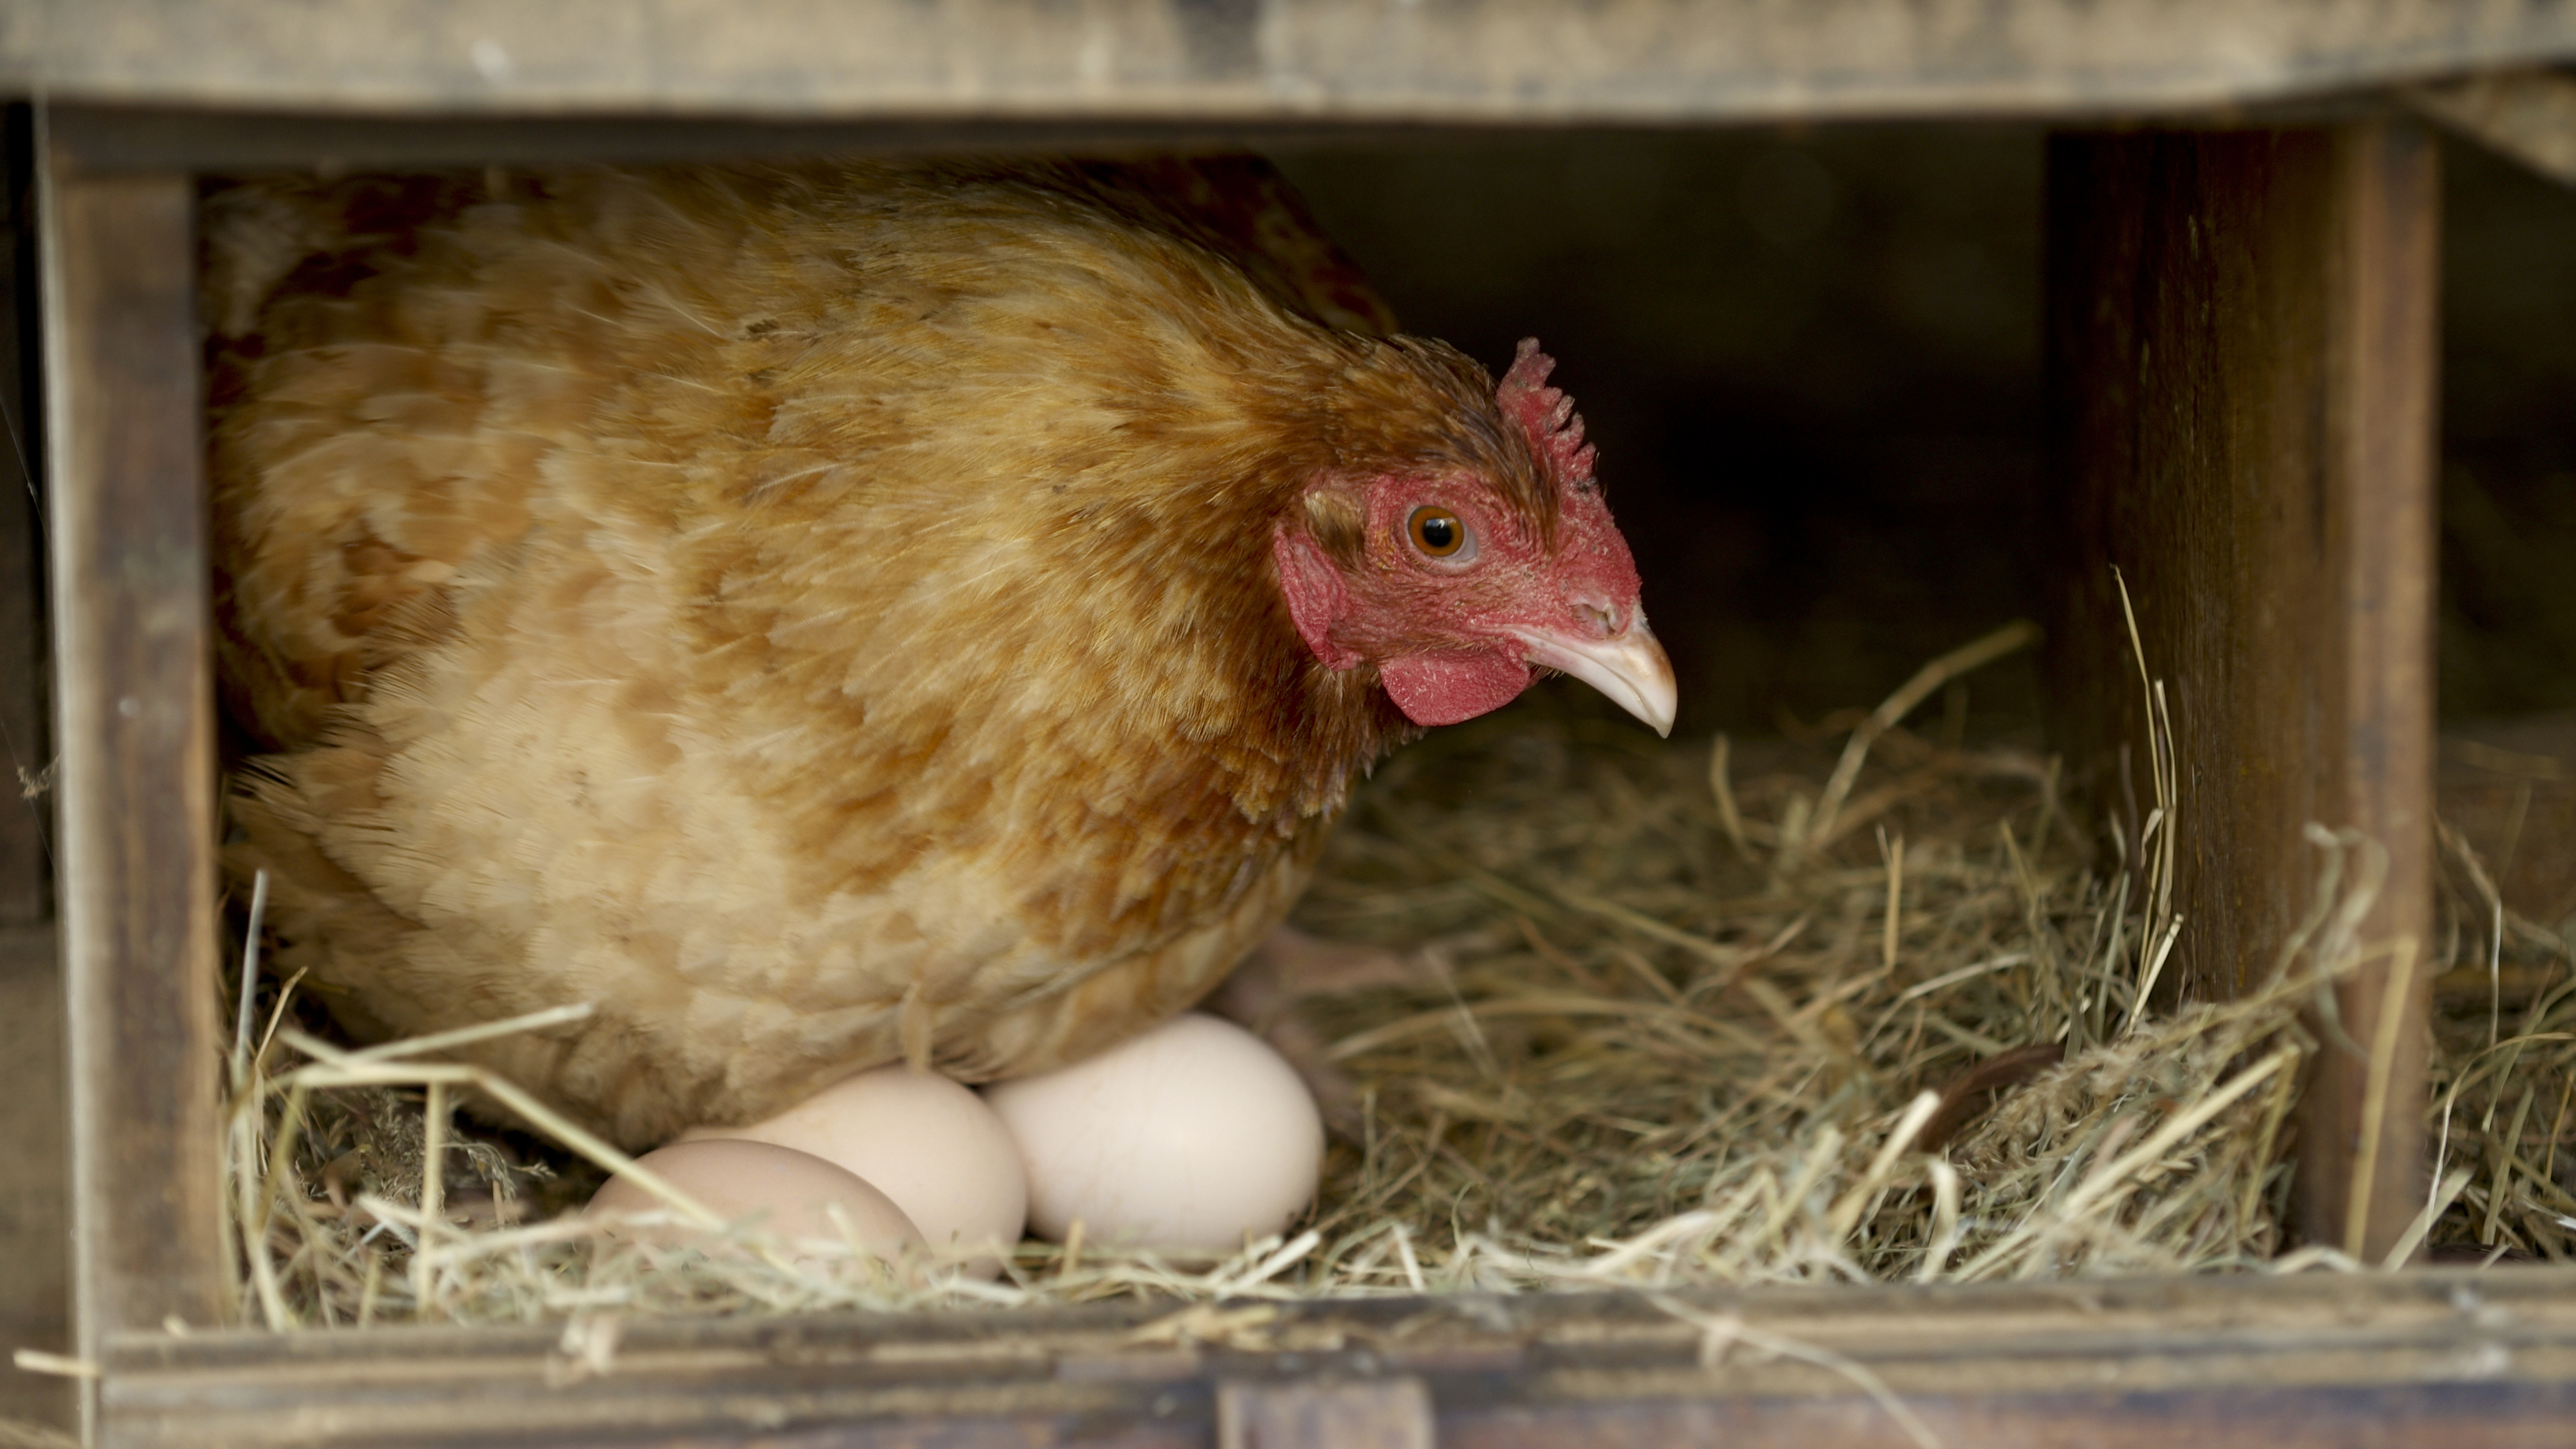 Feeding Eggs To Chickens